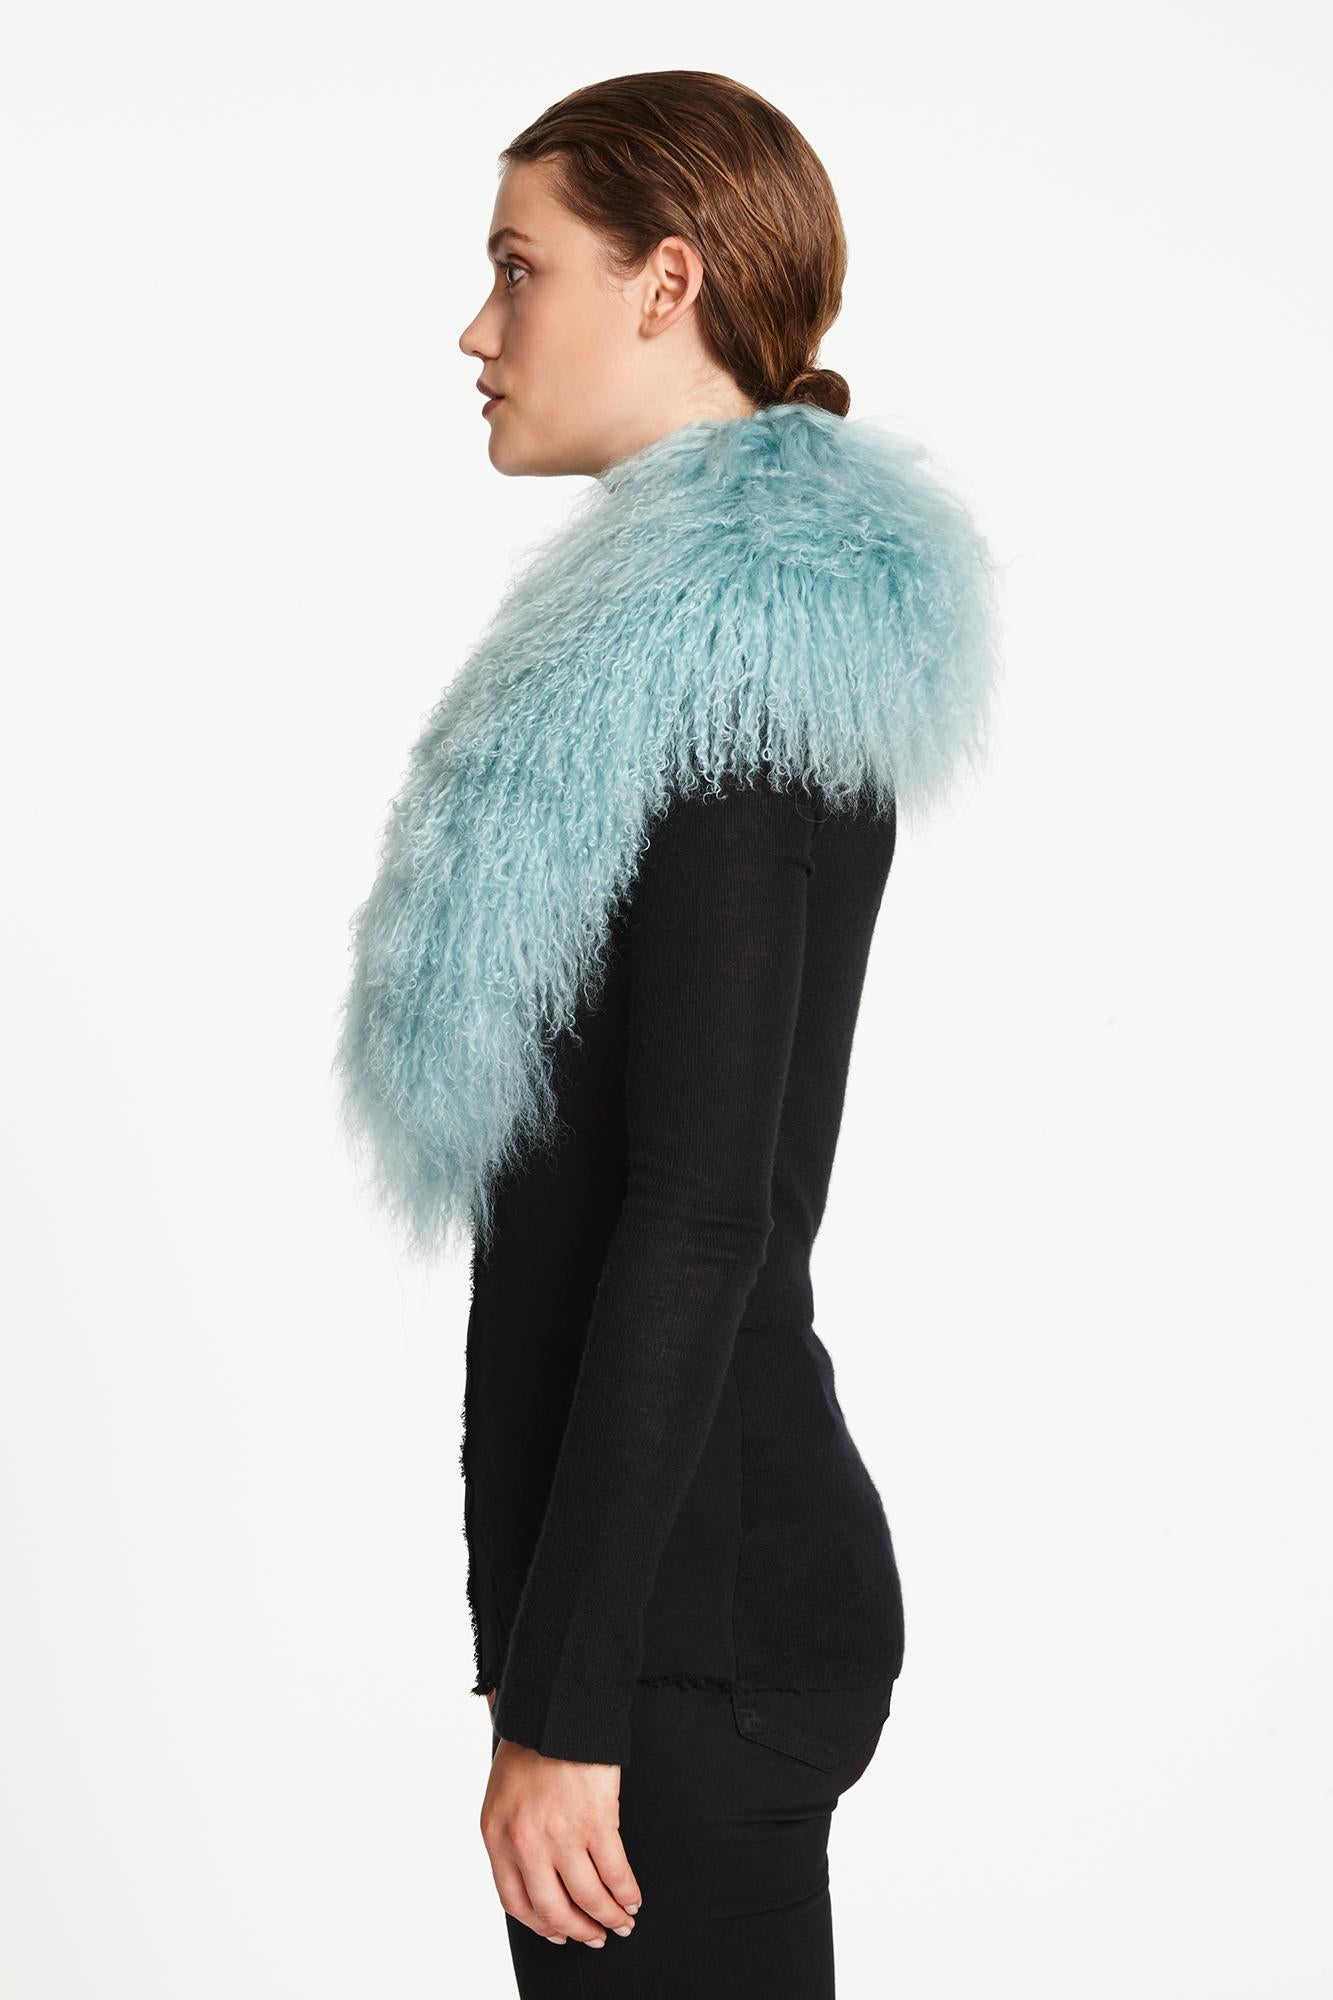 Verheyen London Shawl Collar in Aquamarine Blue Mongolian Lamb Fur  - Brand New  2